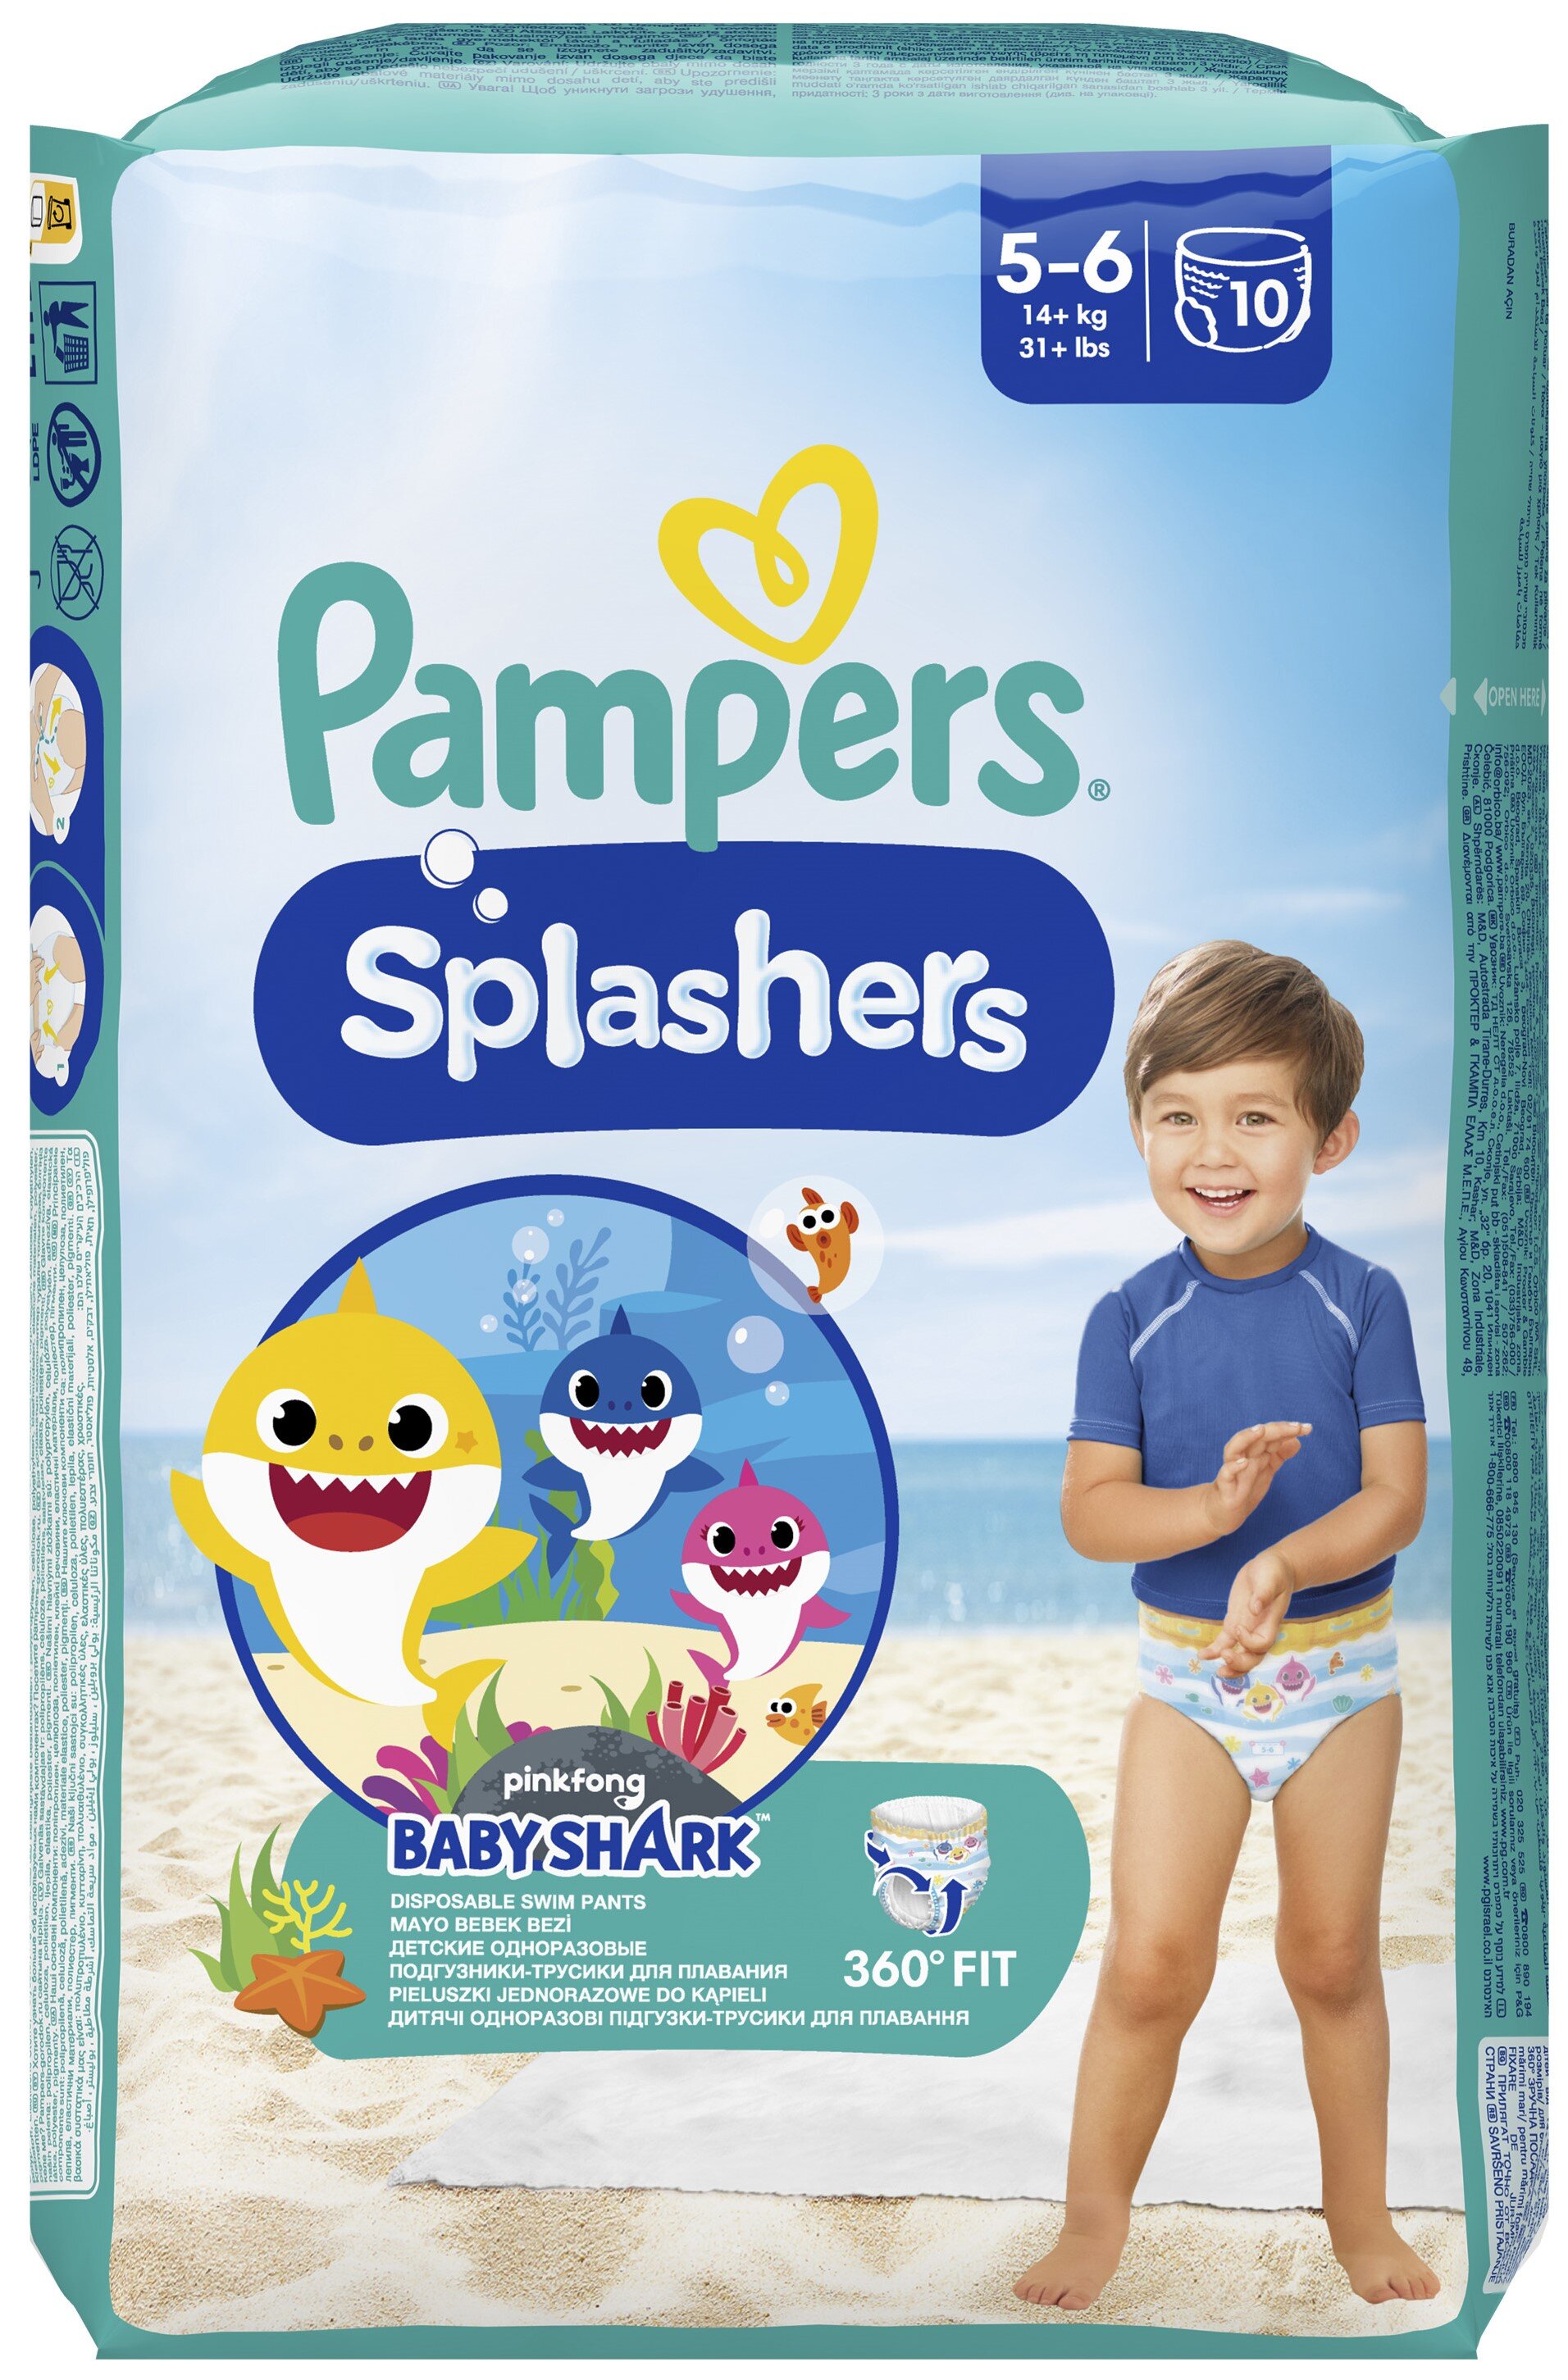 pampers splashers ceneo